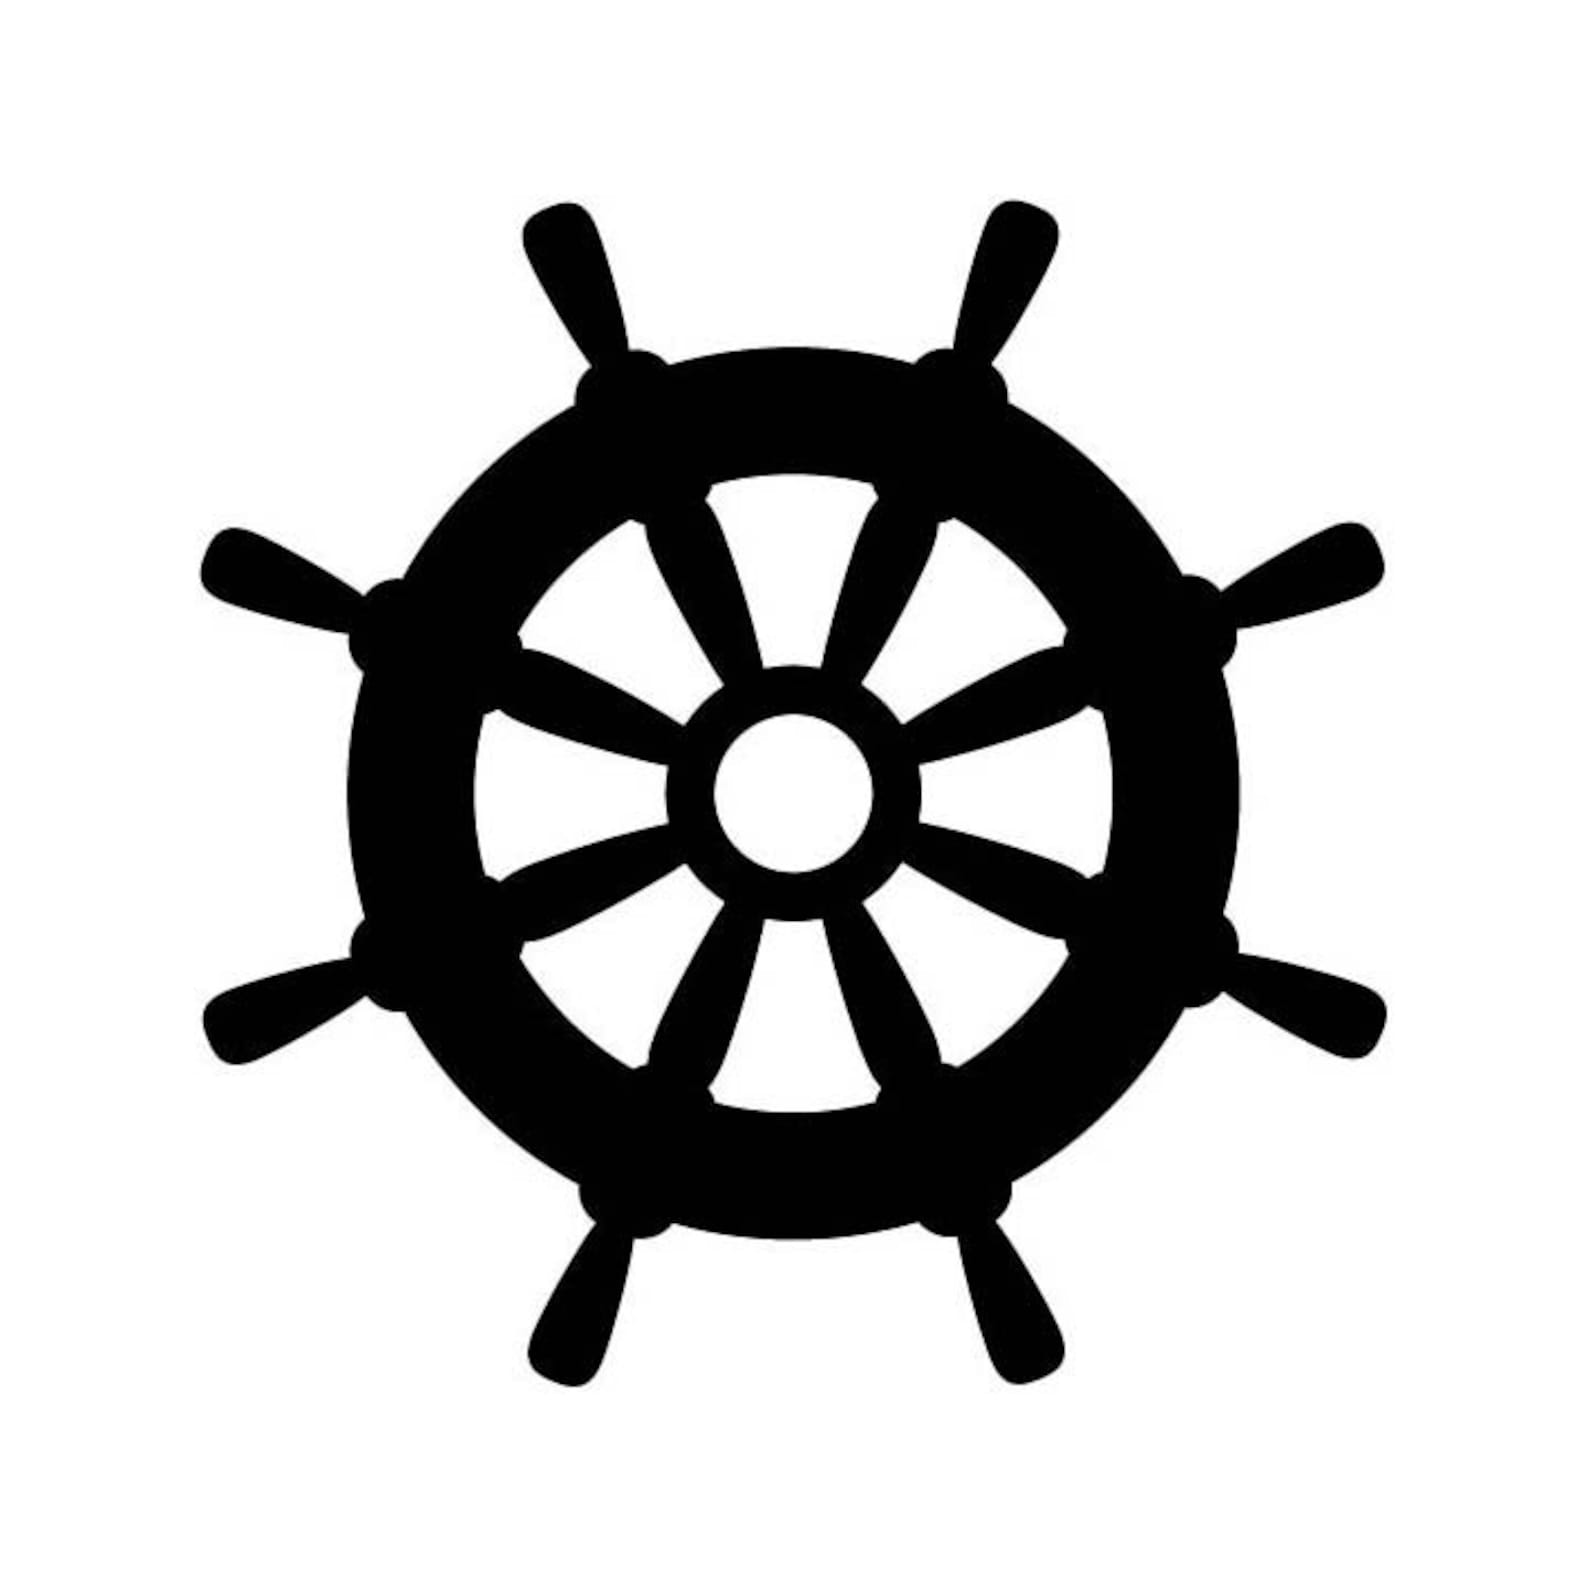 Ship's Wheel Boat's Wheel 1 vector .eps .dxf .svg | Etsy